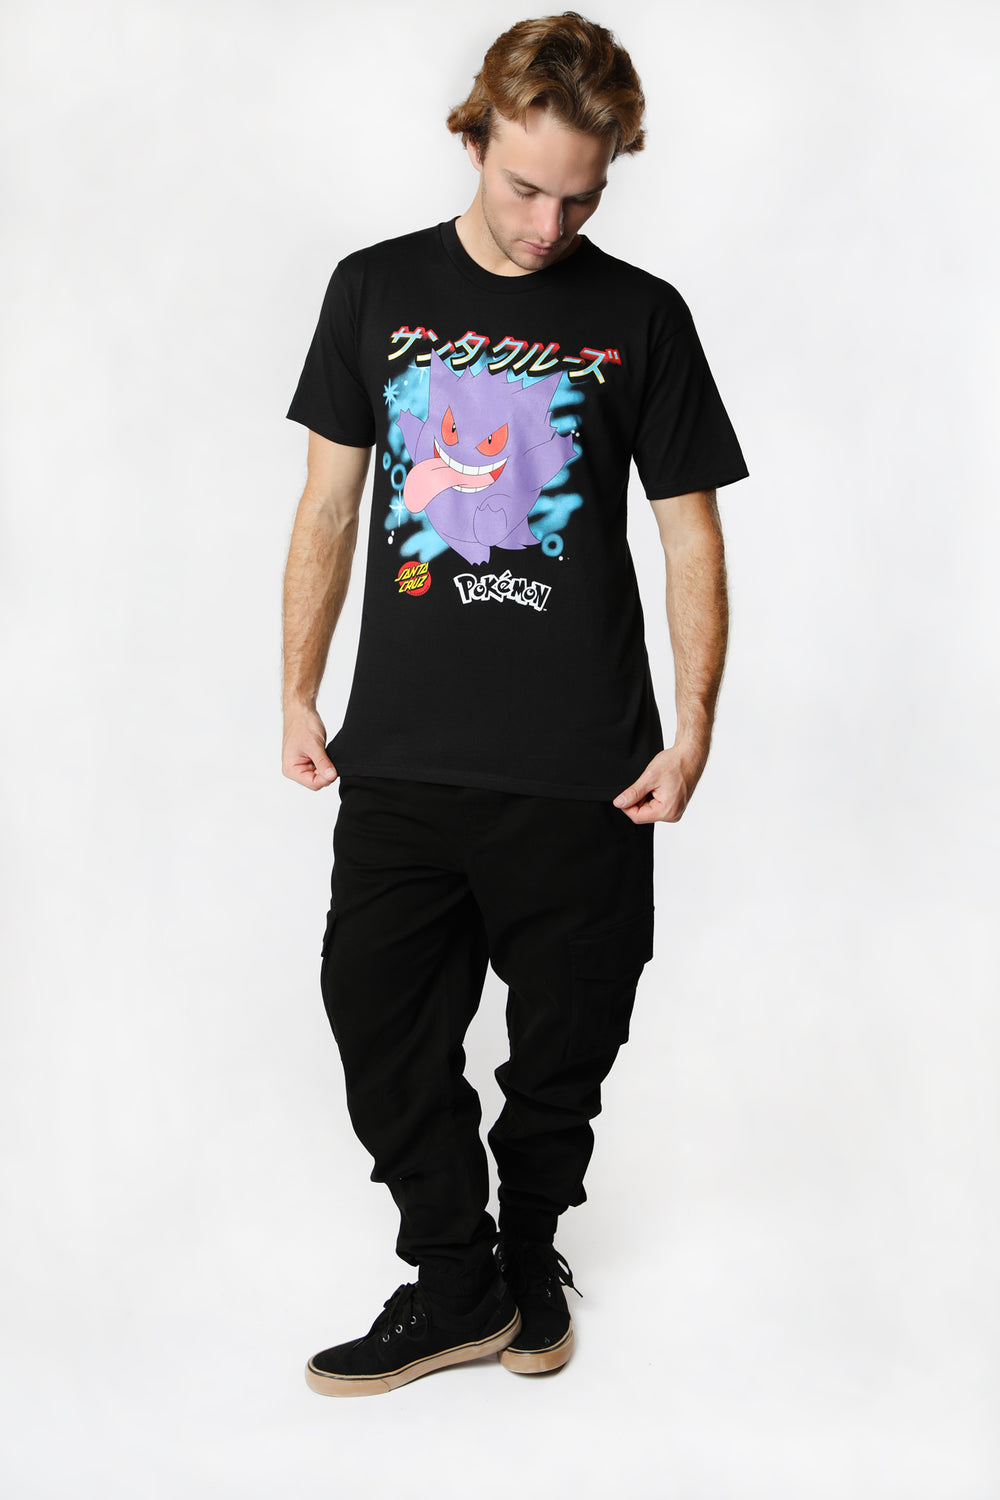 Santa Cruz x Pokémon Ghost Type 3 T-Shirt Black